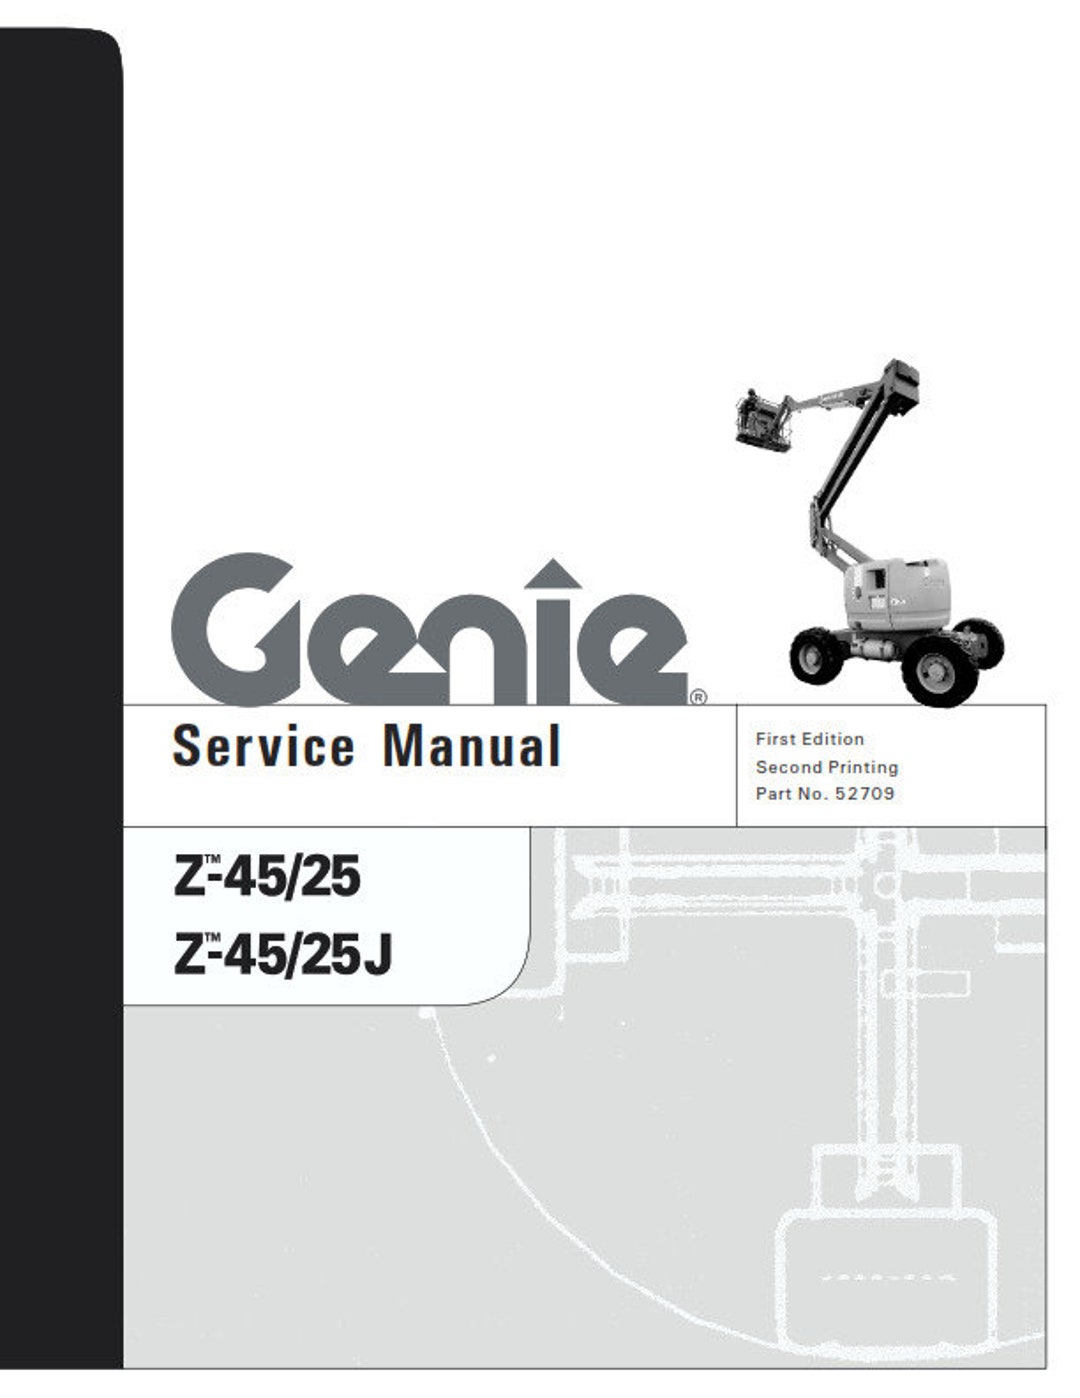 Genie Z-45/25 Z-45/25J Service Workshop Repair Manual Reprinted Sep 2000  Edition 